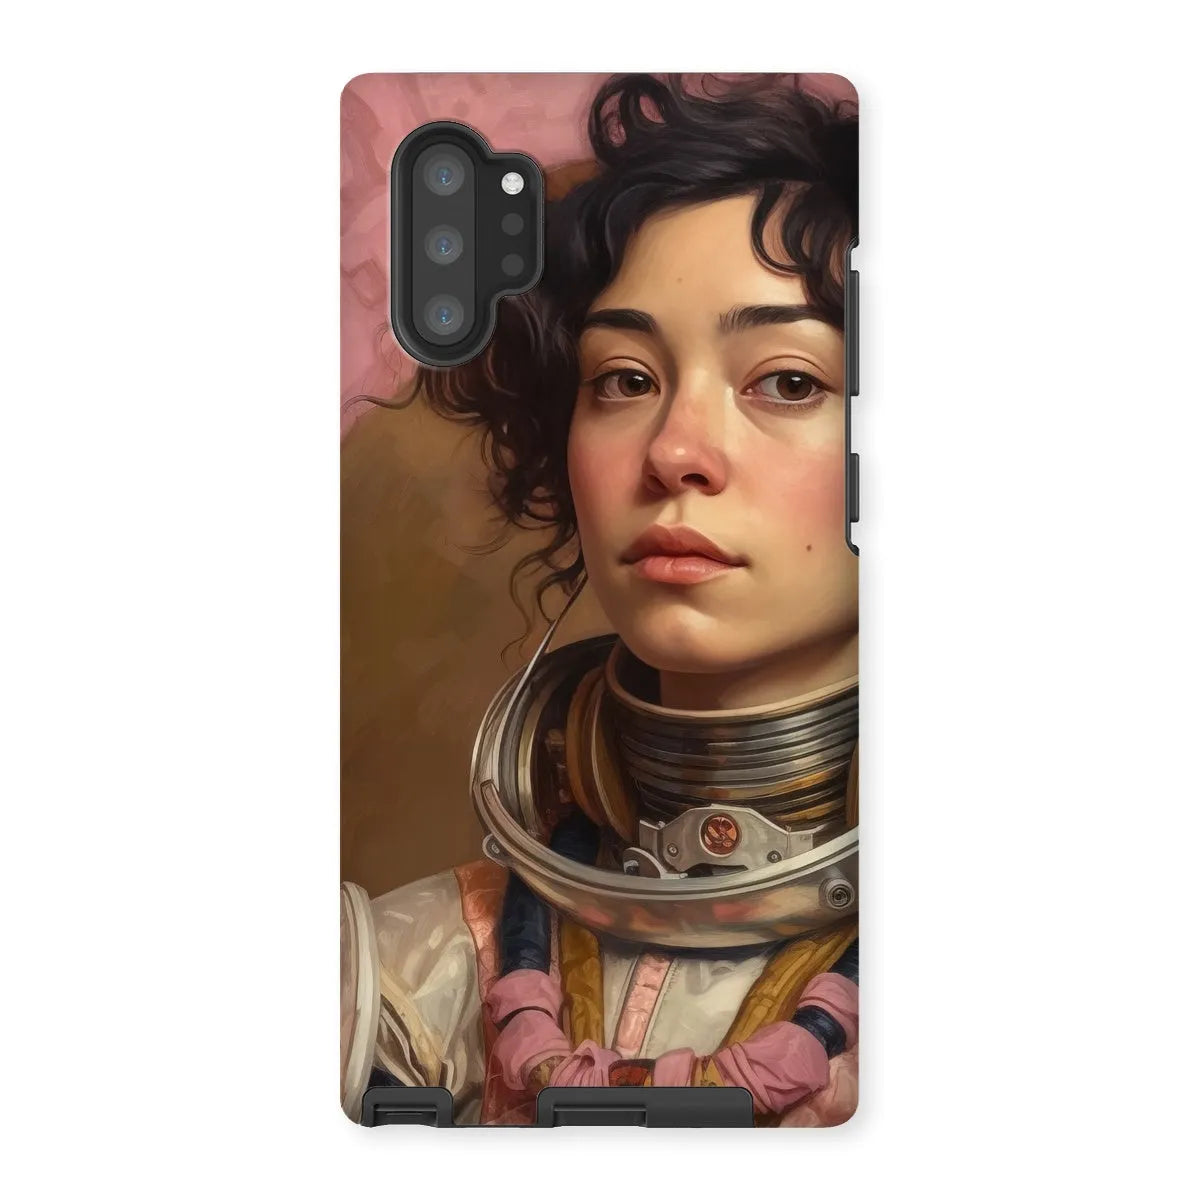 Faustina The Lesbian Astronaut - Lgbtq Art Phone Case - Samsung Galaxy Note 10p / Matte - Mobile Phone Cases